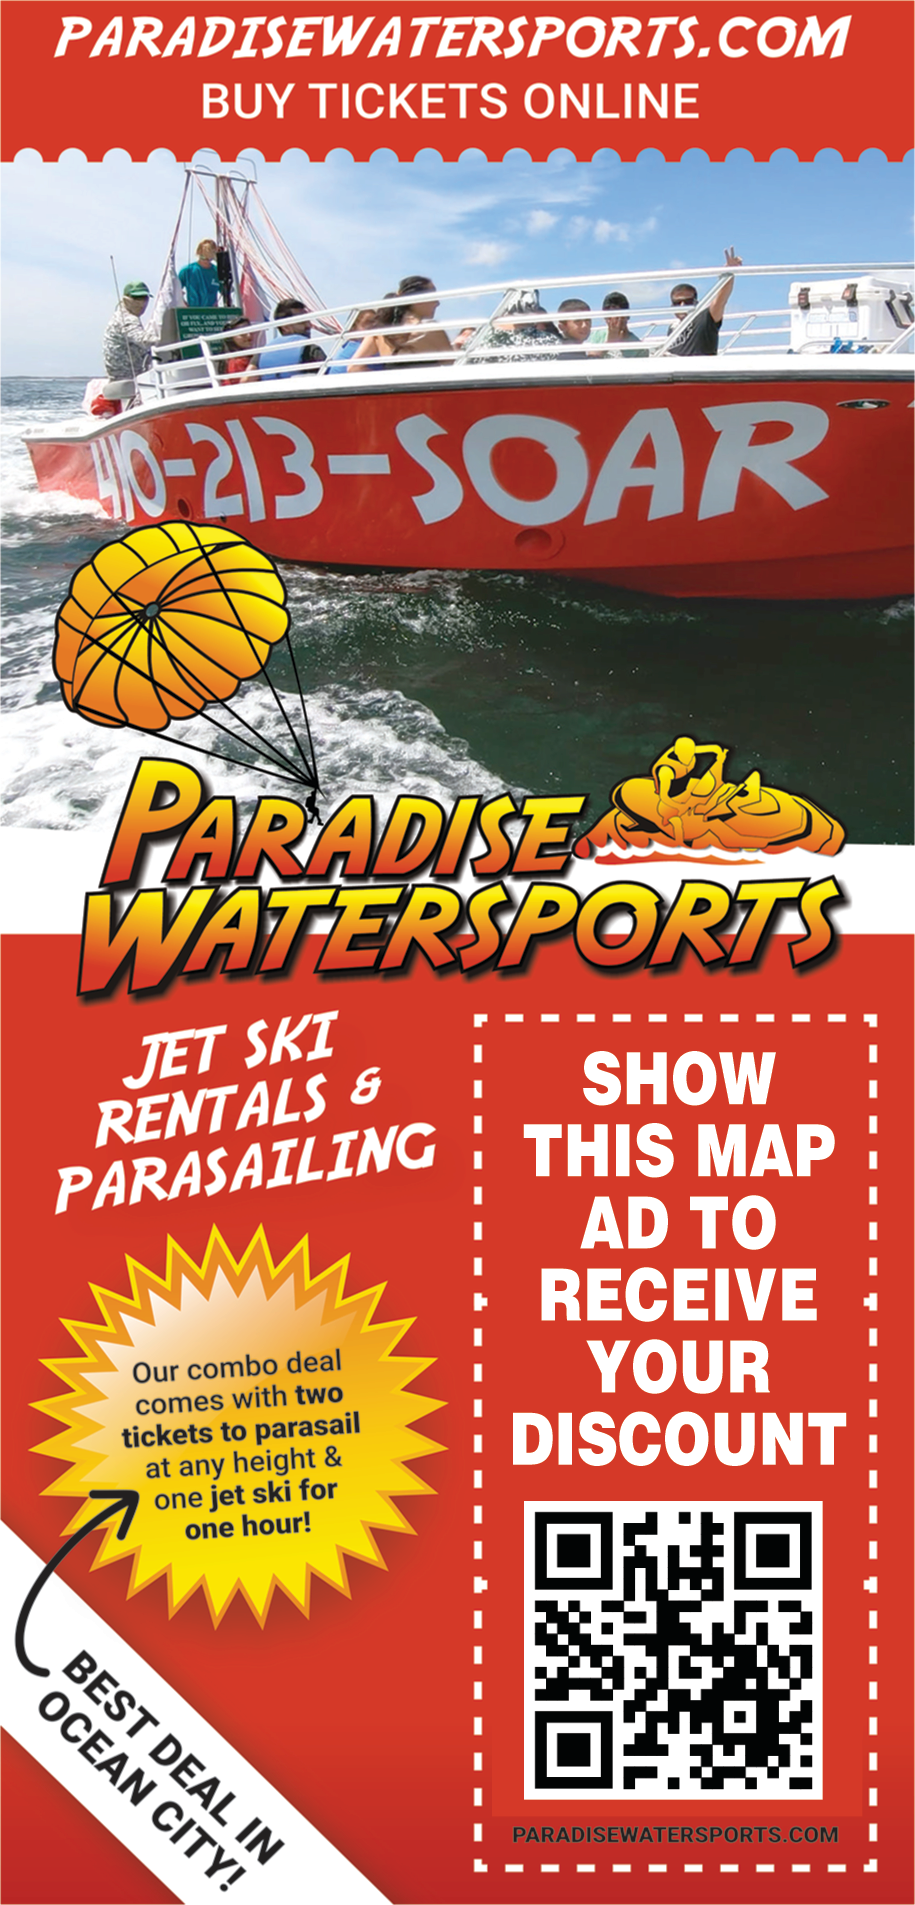 PARADISE WATERSPORTS Print Ad